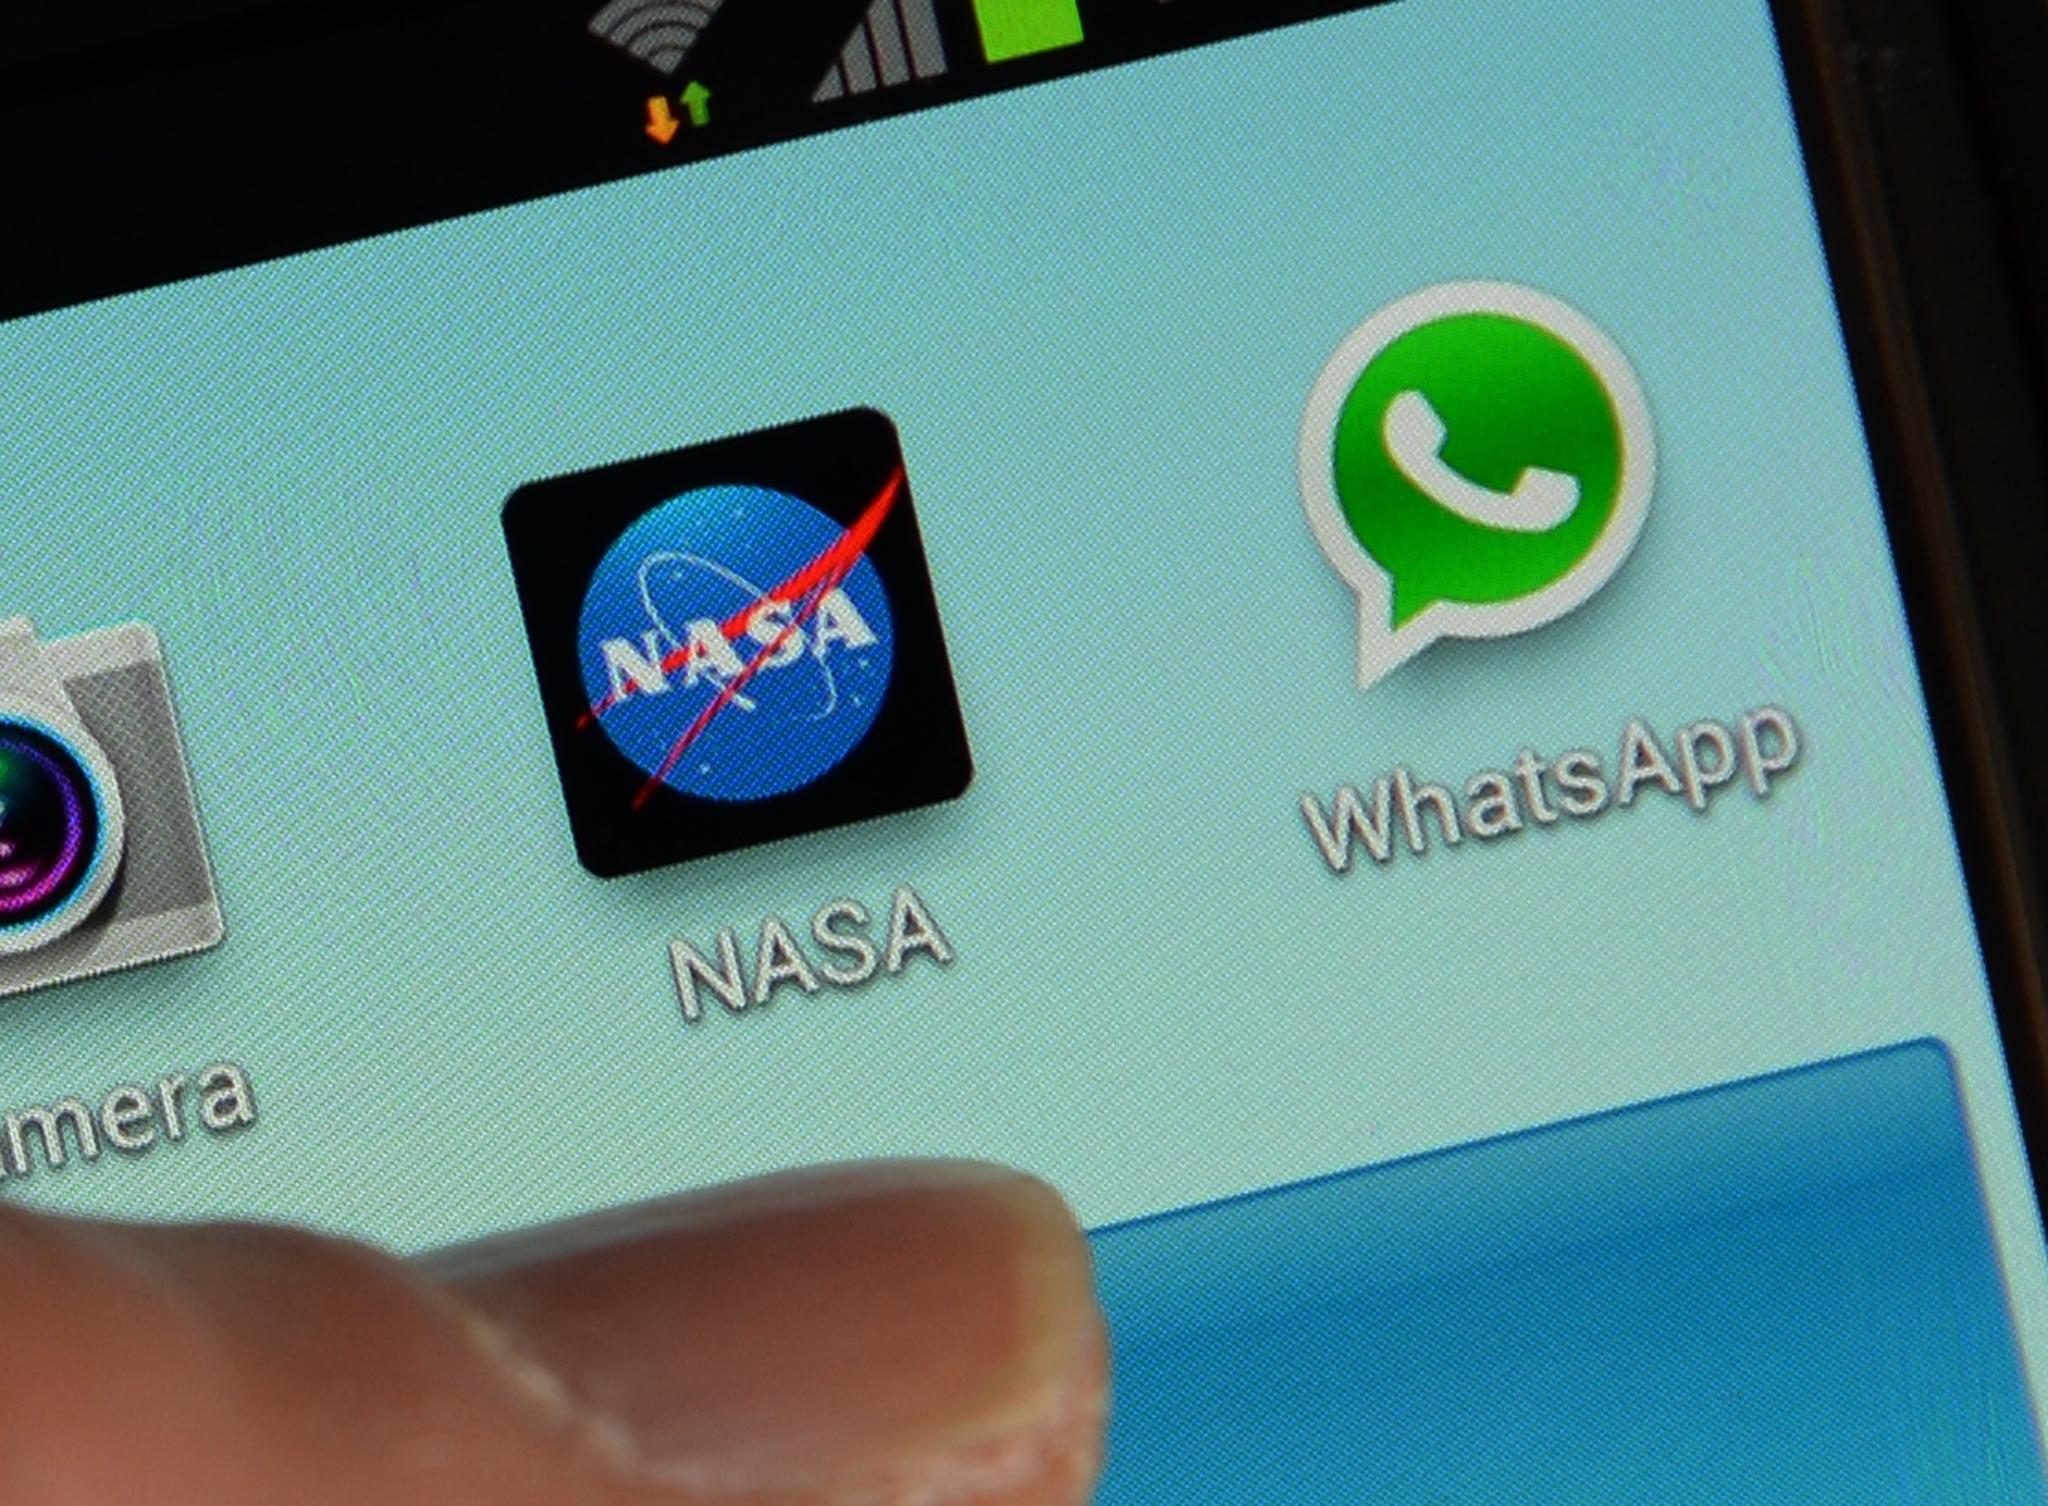 Logo of WhatsApp seen on a smartphone February 20, 2014 in New York